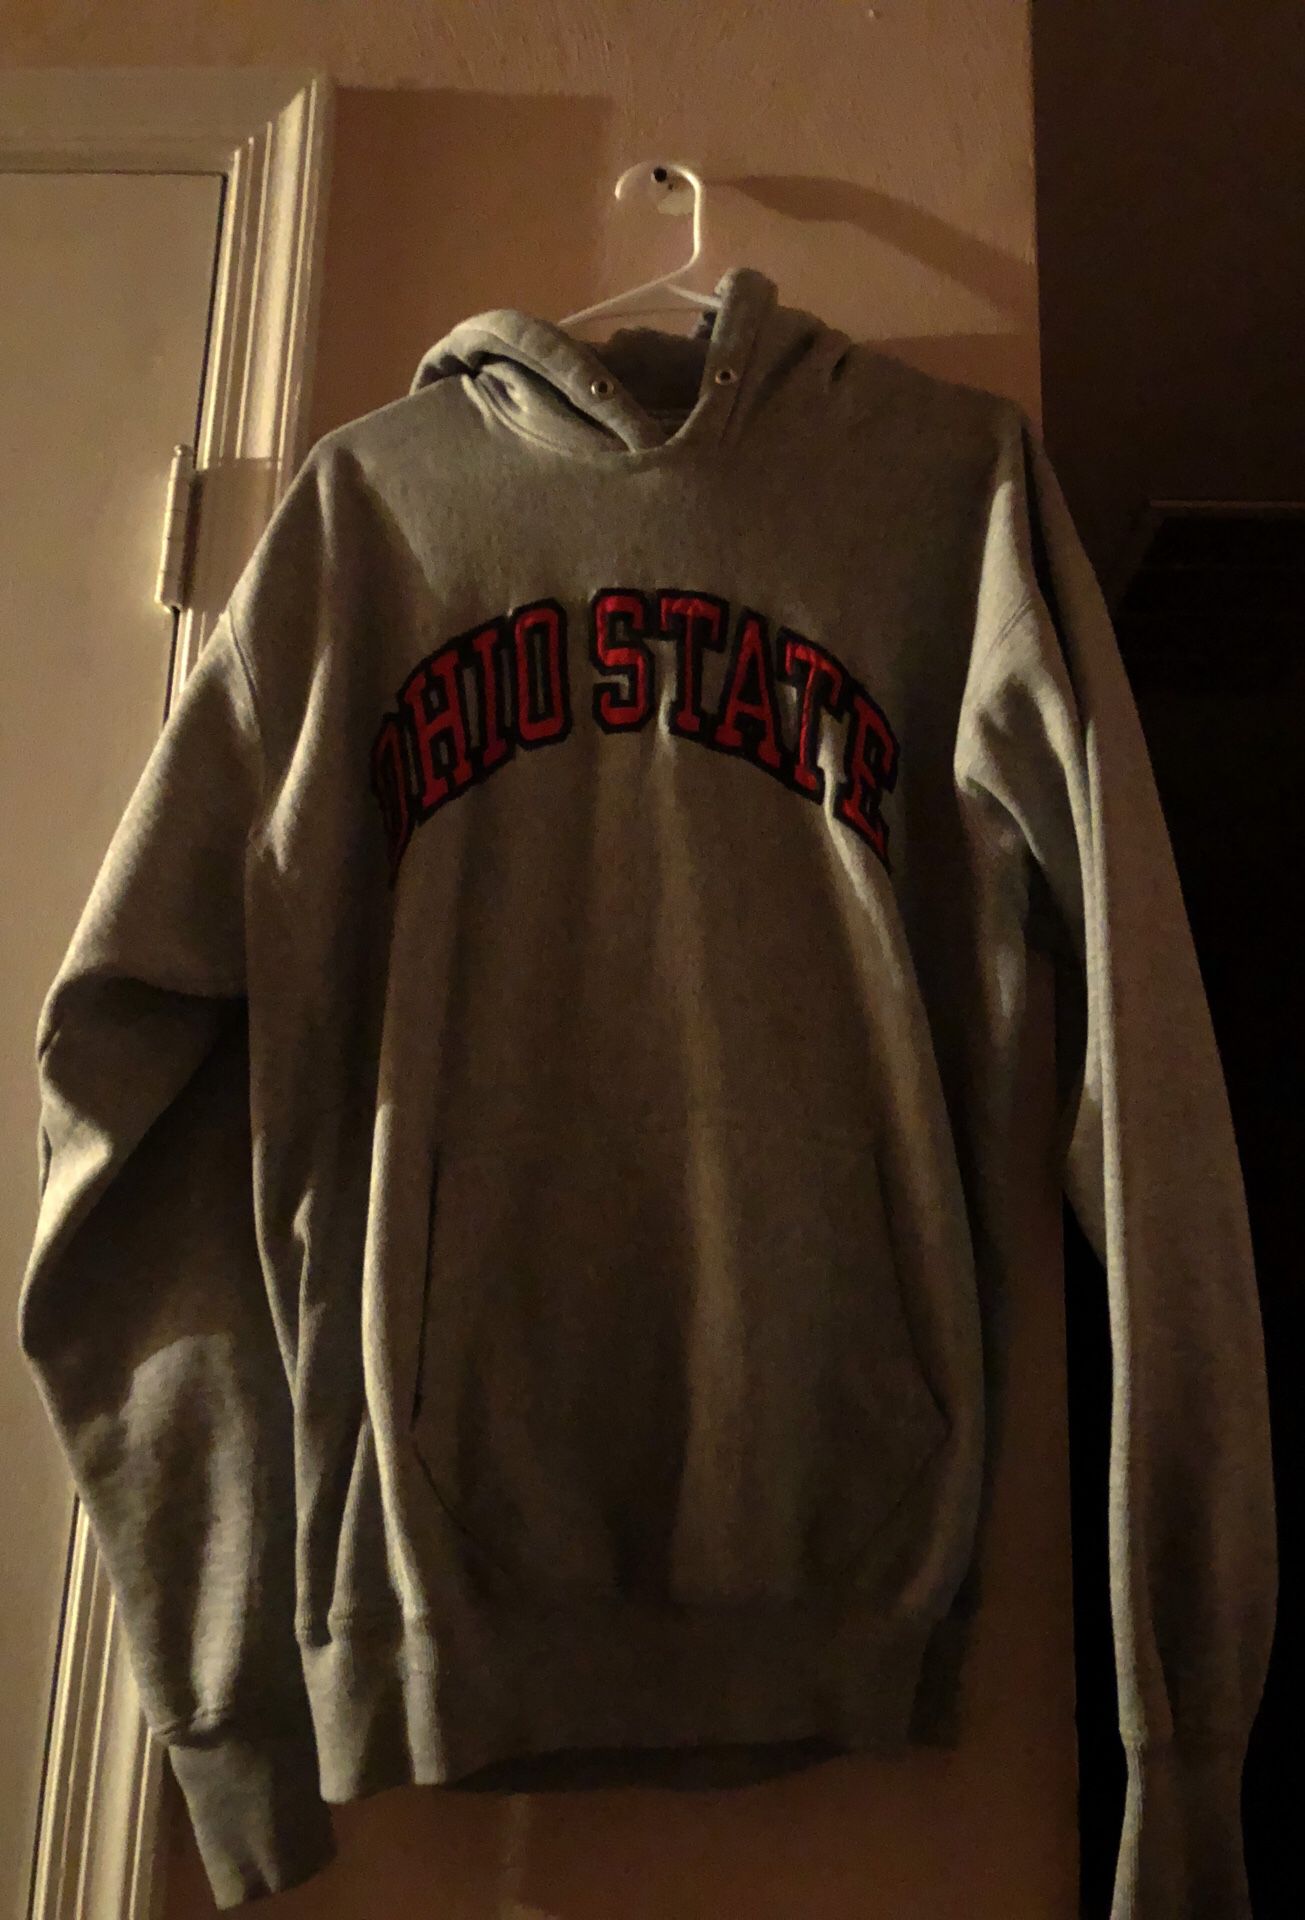 The Ohio State hoodie